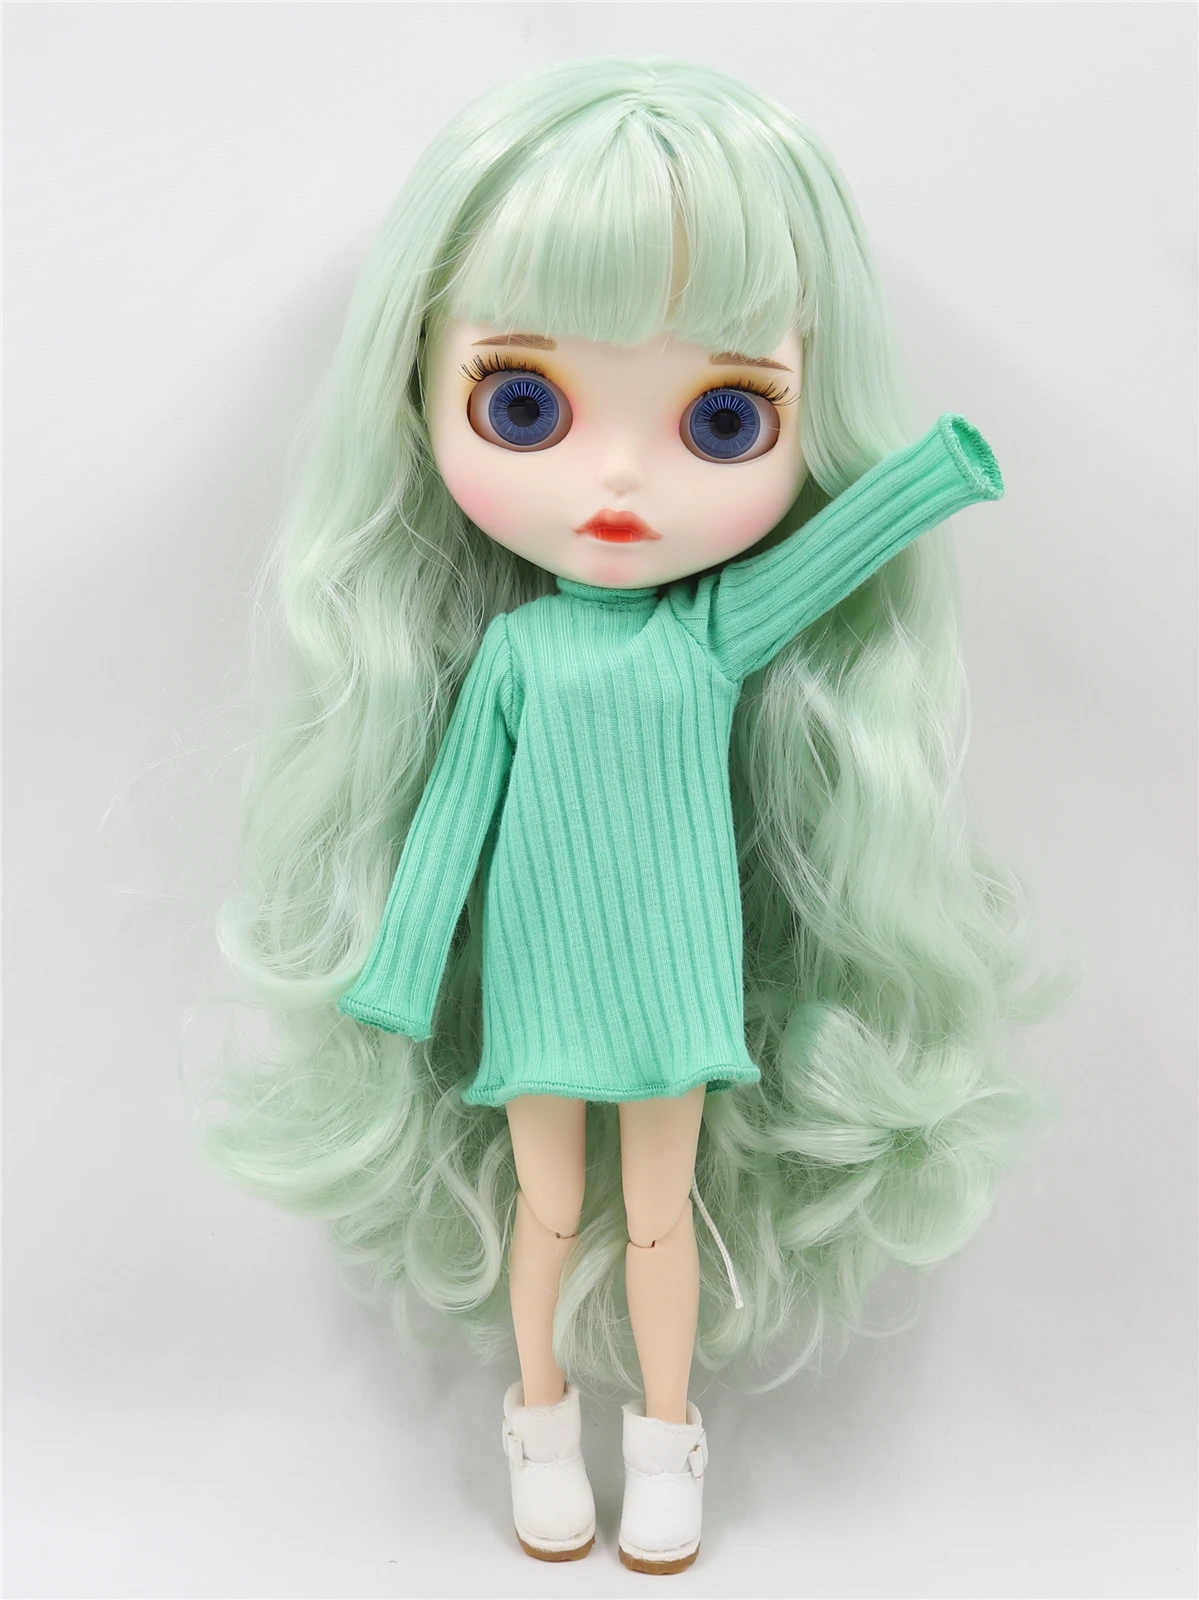 Neo Blythe 緑の髪、白い肌、マットでキュートな顔の人形 Custom ジョイントボディ1